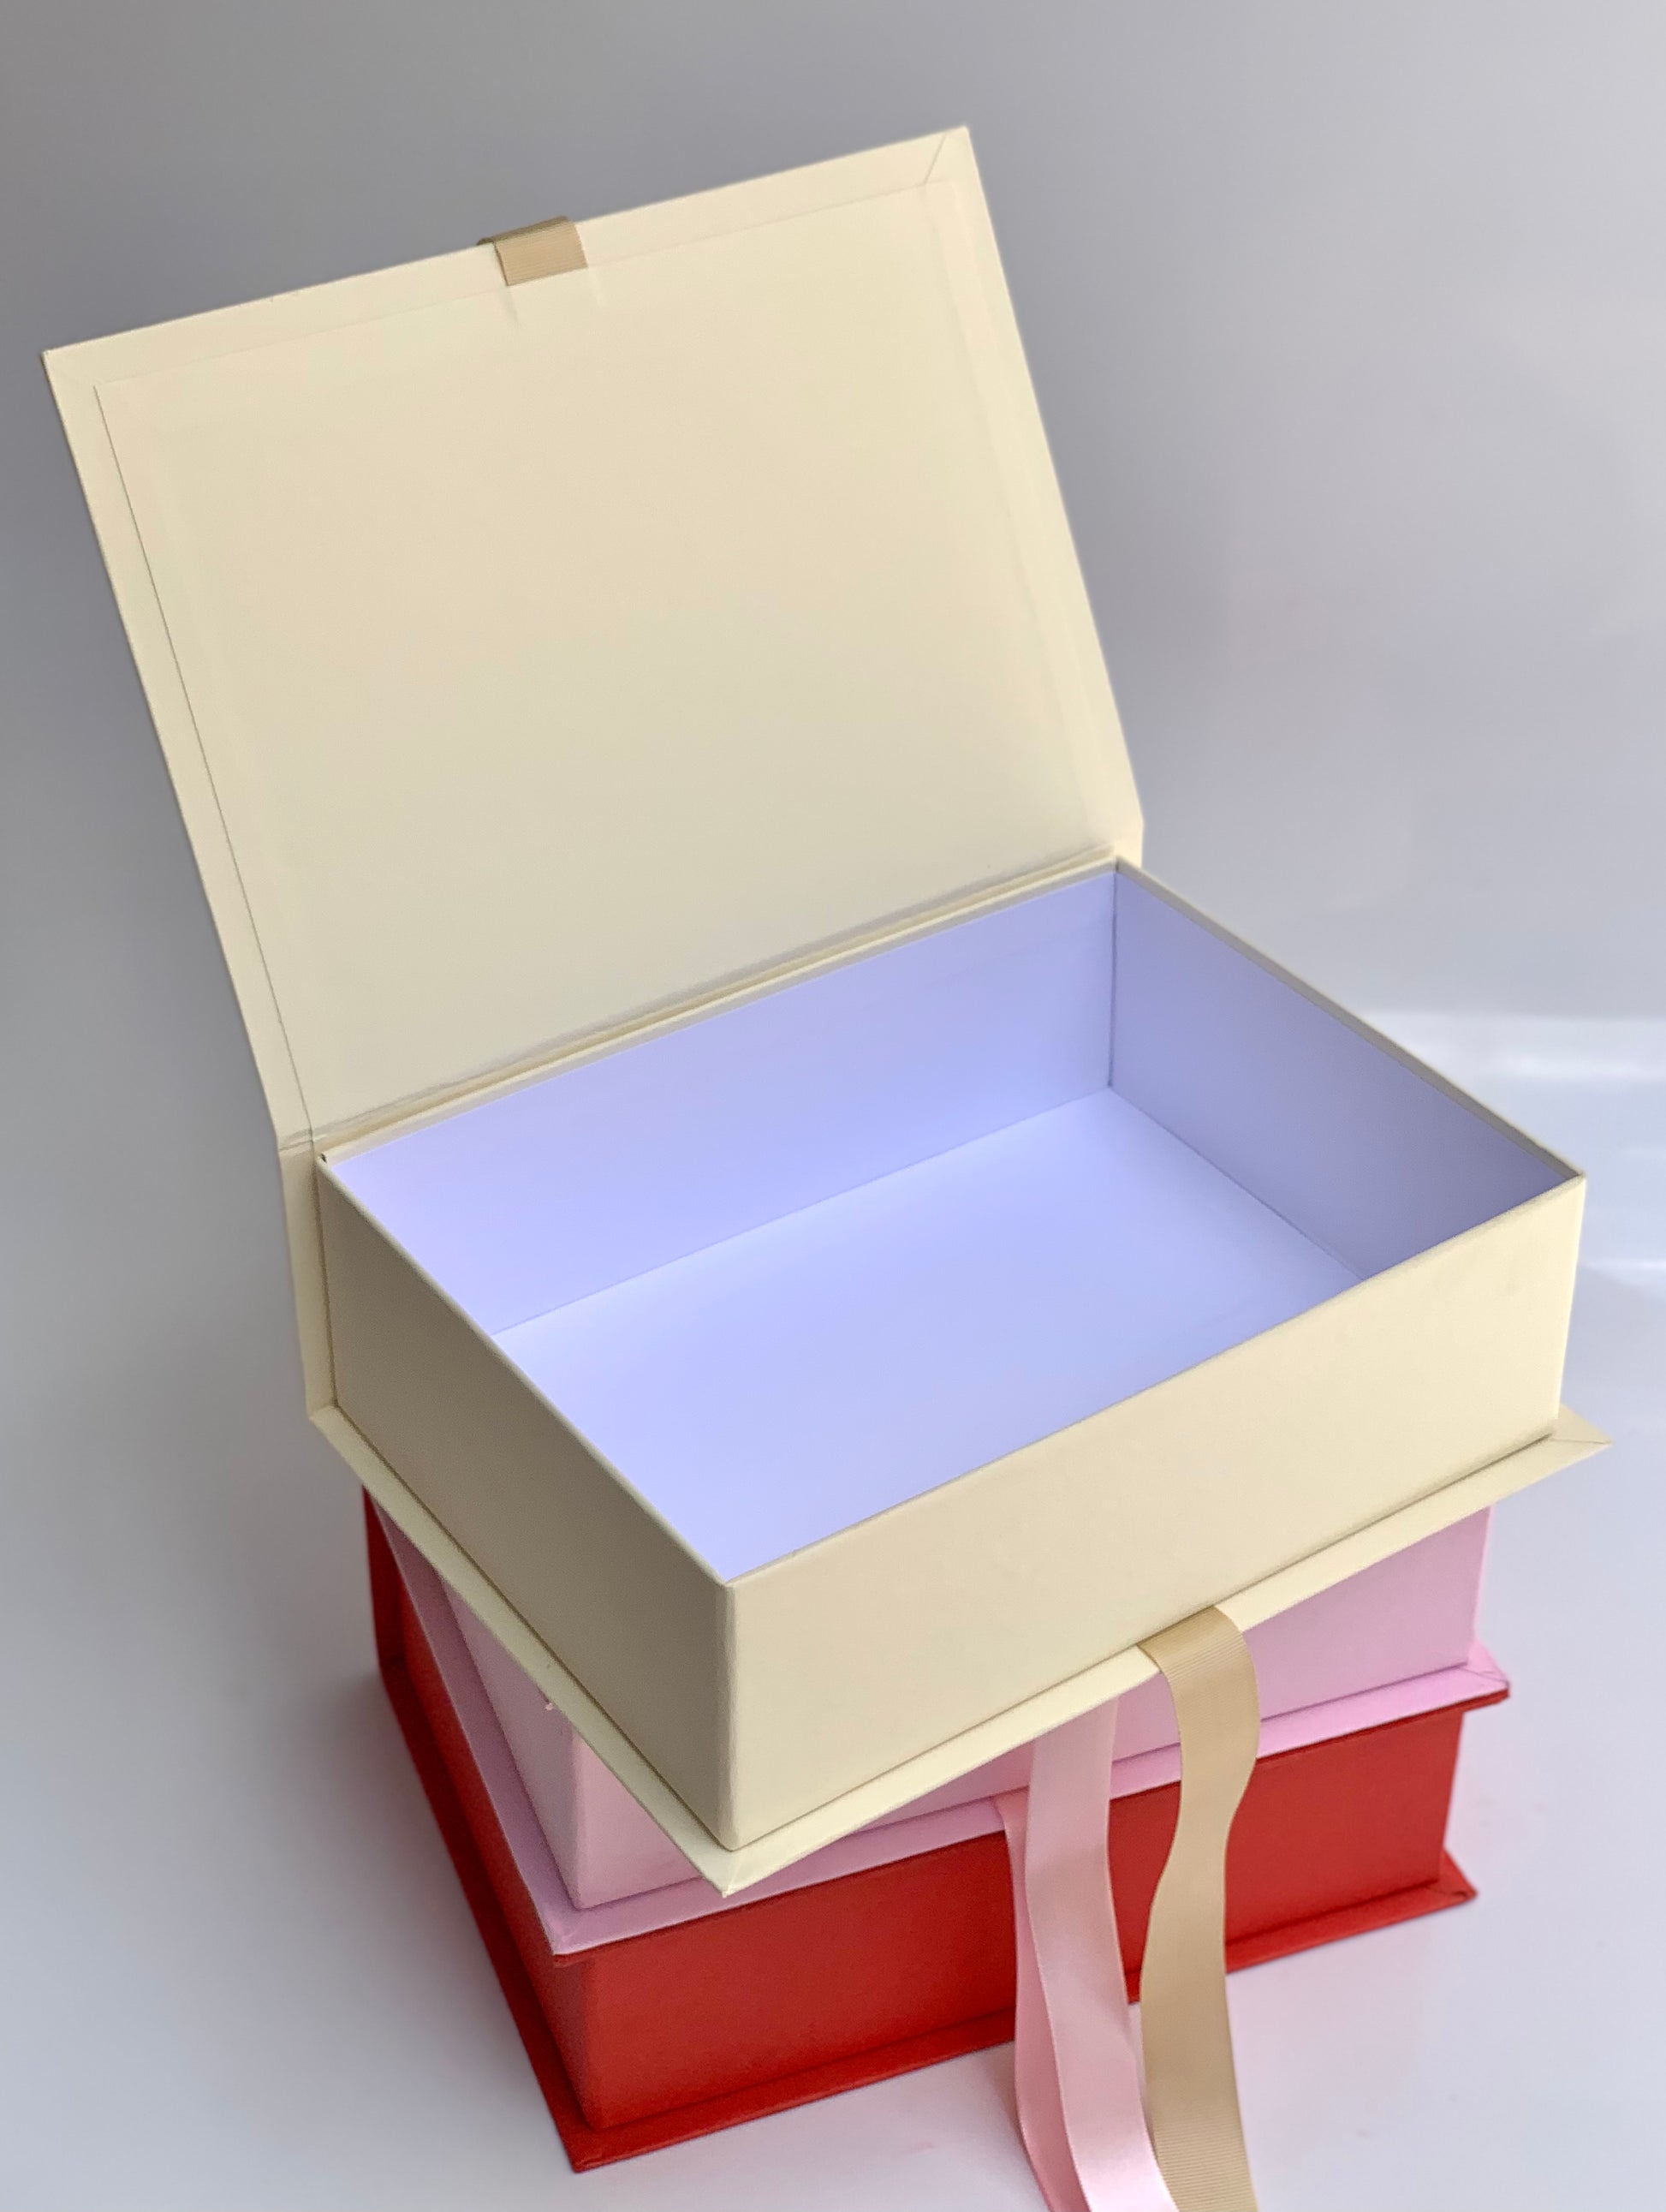 Cajas para Libros - Packaging Libros